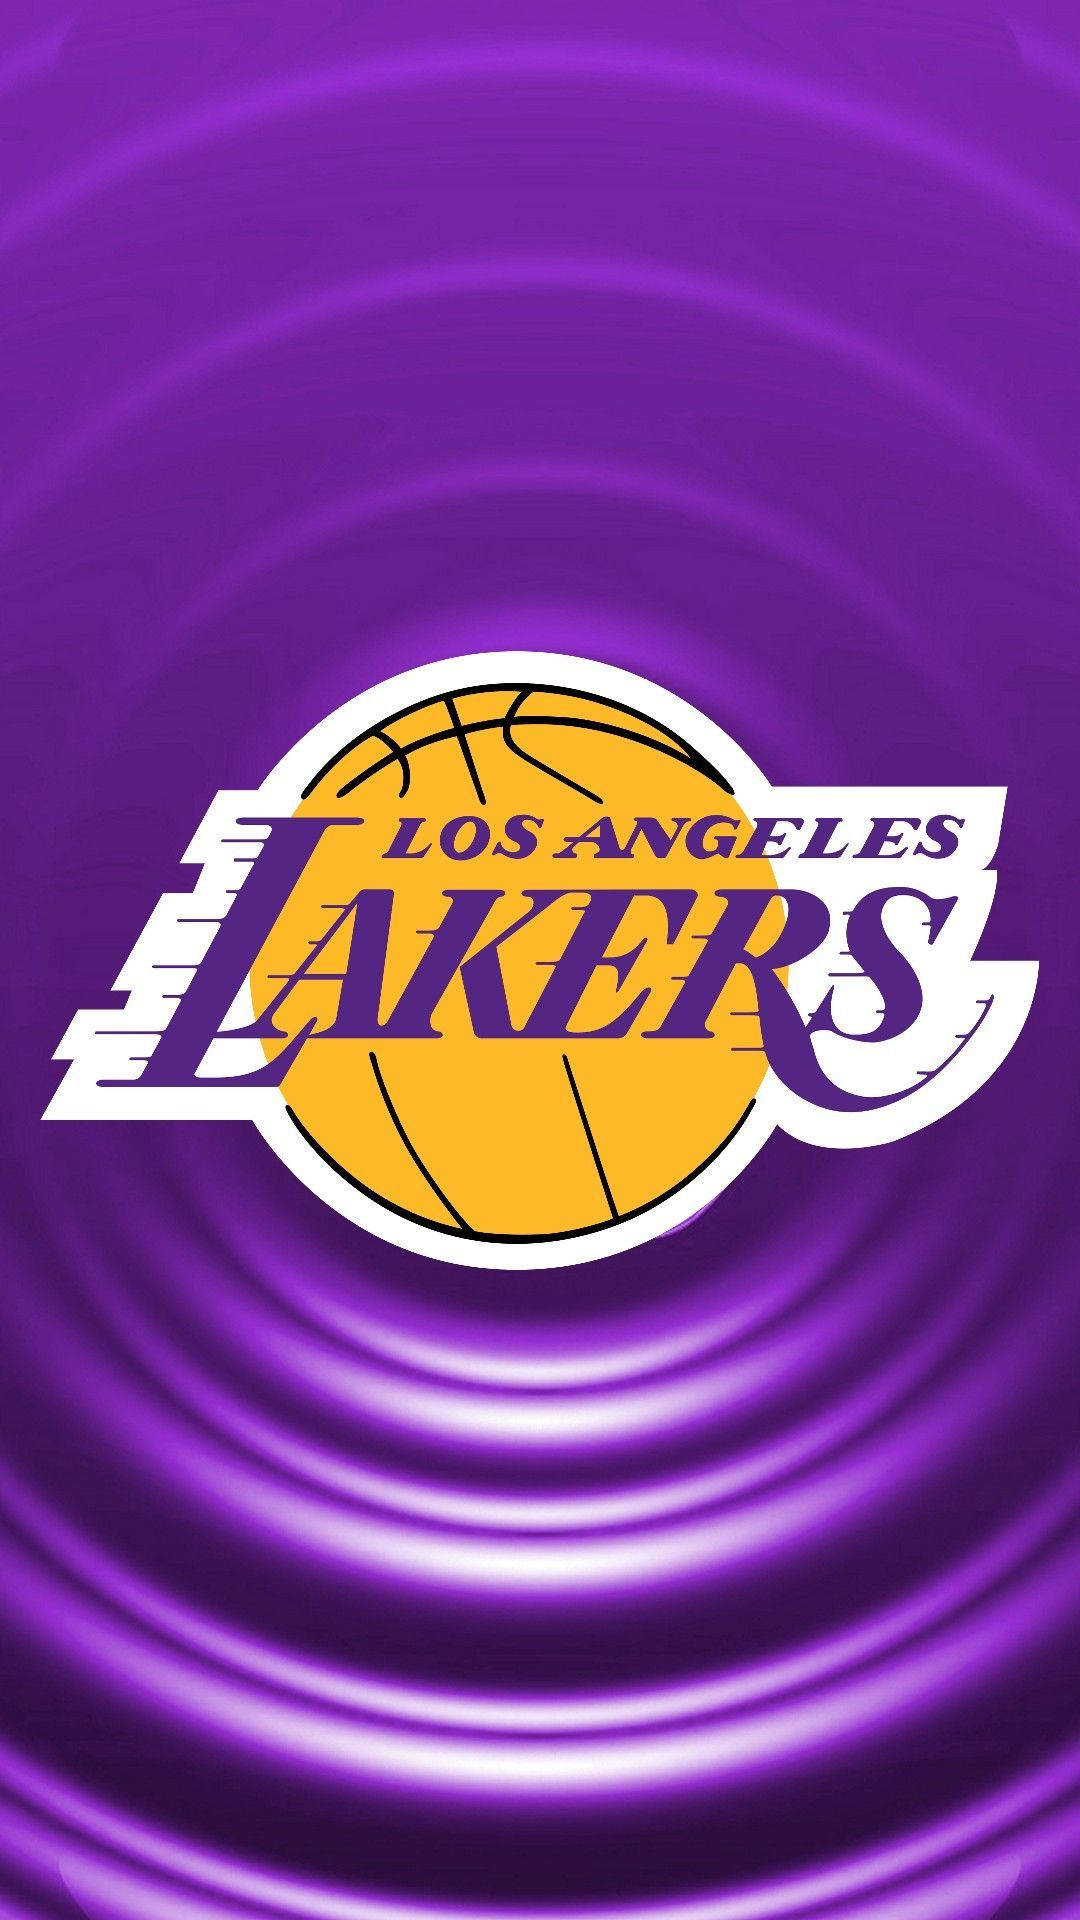 Feiernsie Die Los Angeles Lakers Mit Diesem Lebendigen Iphone Hintergrundbild Wallpaper